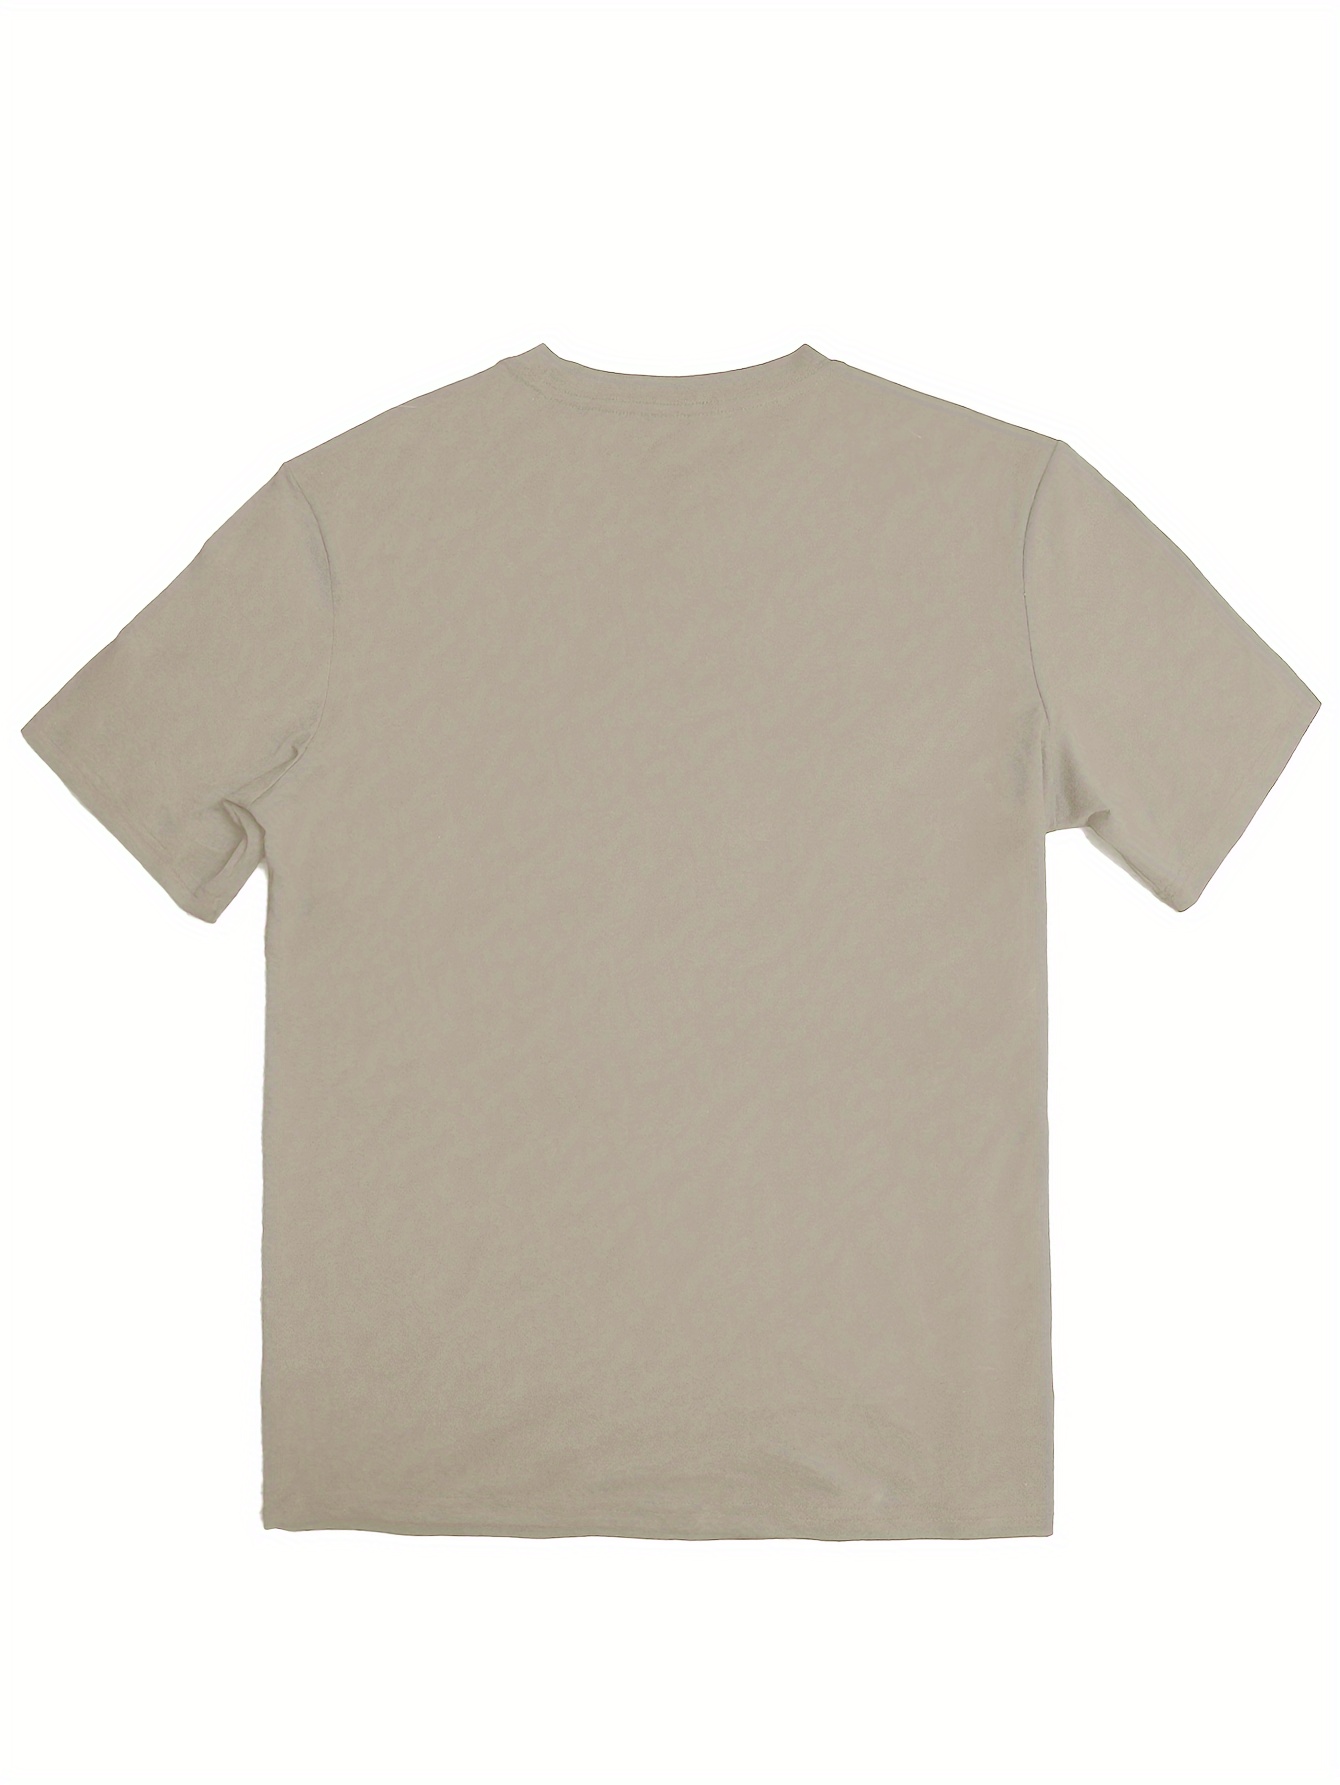 Camiseta hombre manga corta - Calavera Play Music Realidad Aumentada. –  Camisetas Albahaca